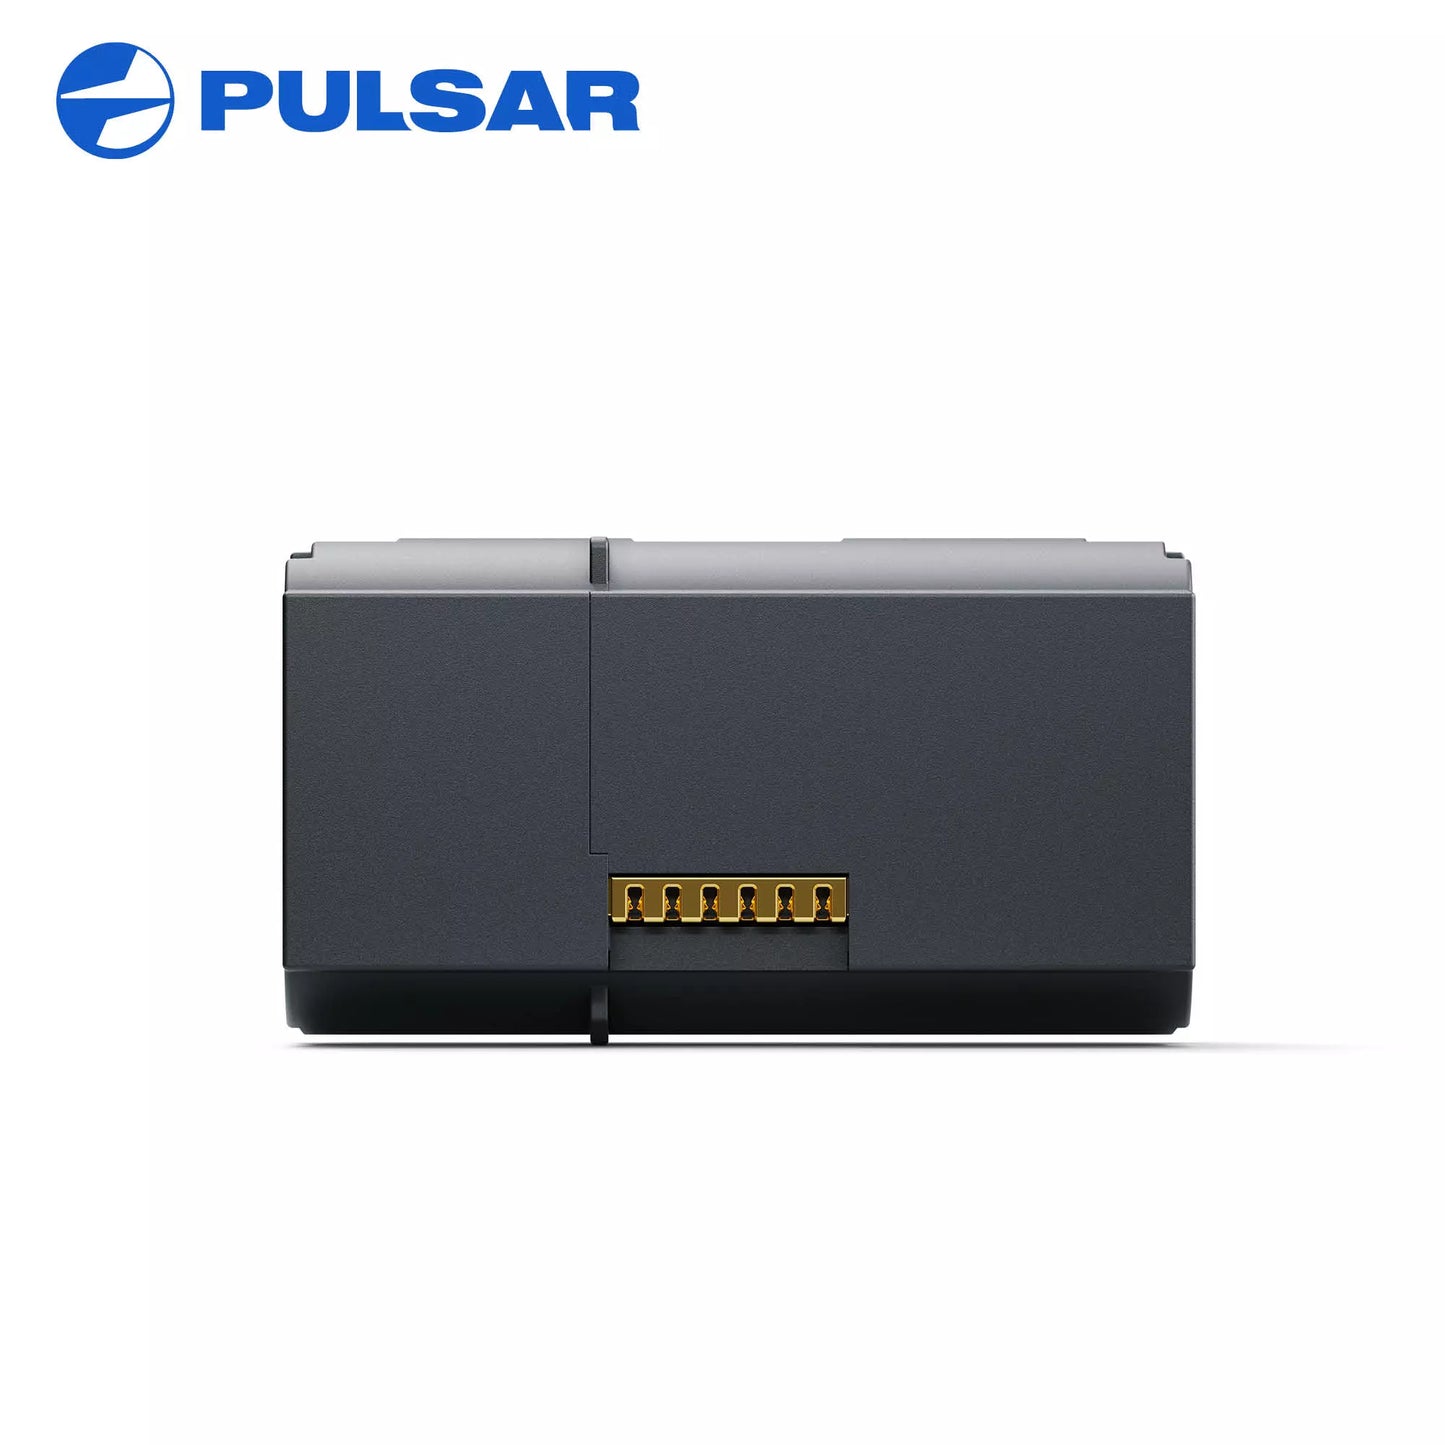 Pulsar IPS 7i Battery Pack